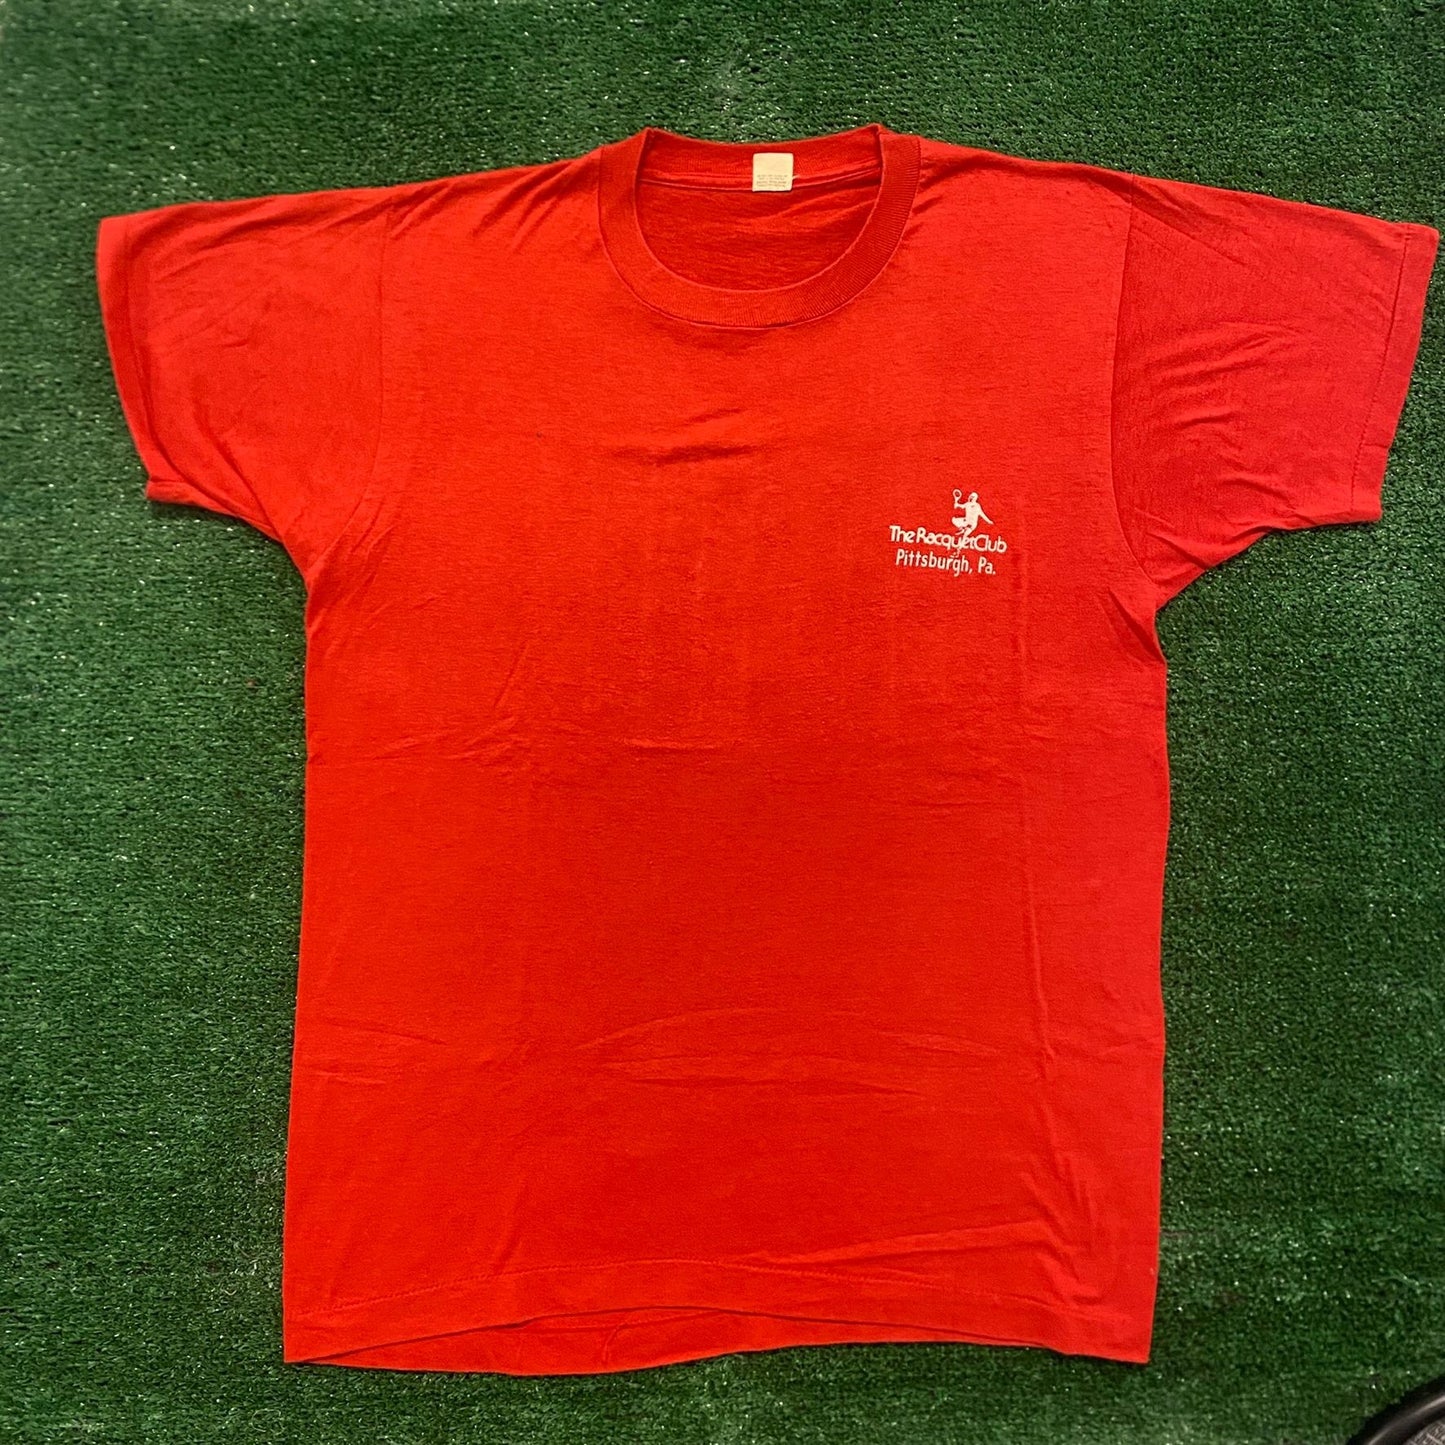 Vintage 80s Squash Tournament Single Stitch T-Shirt